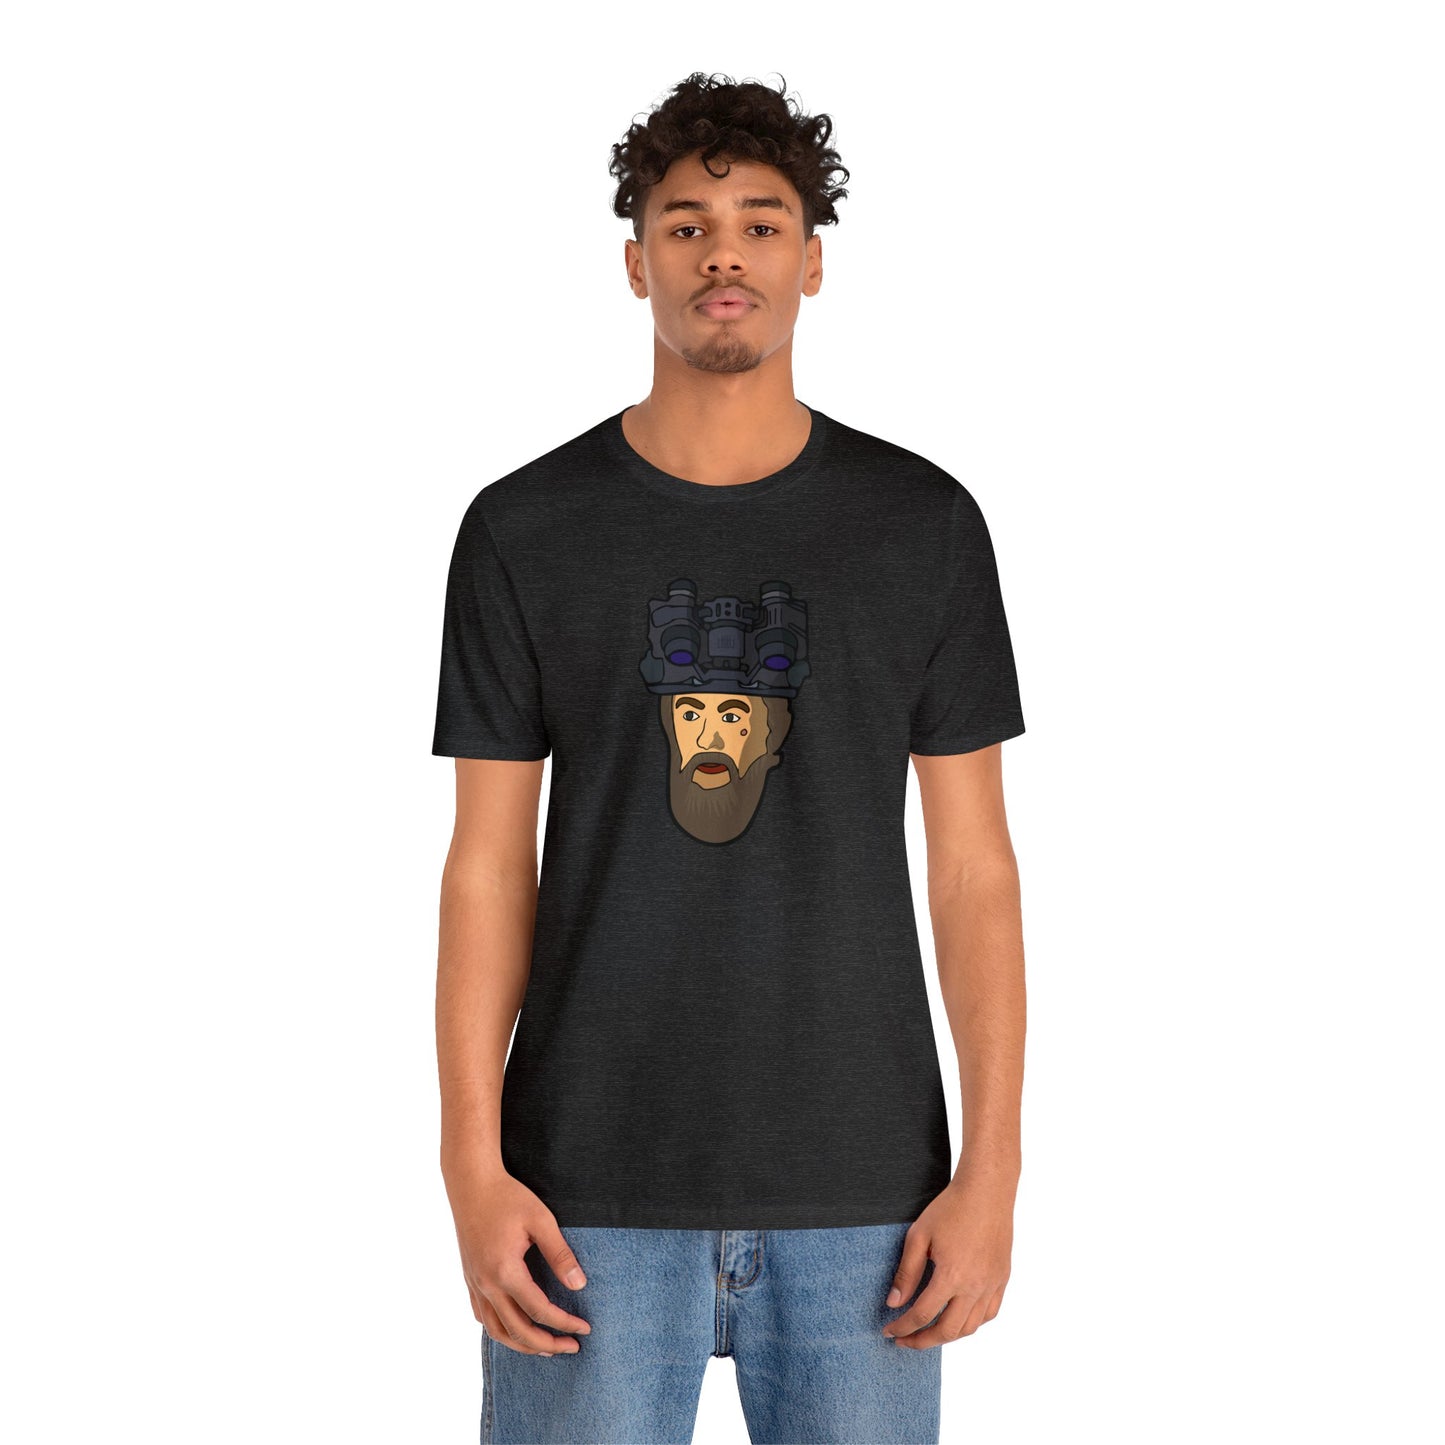 Galileo Head Shirt